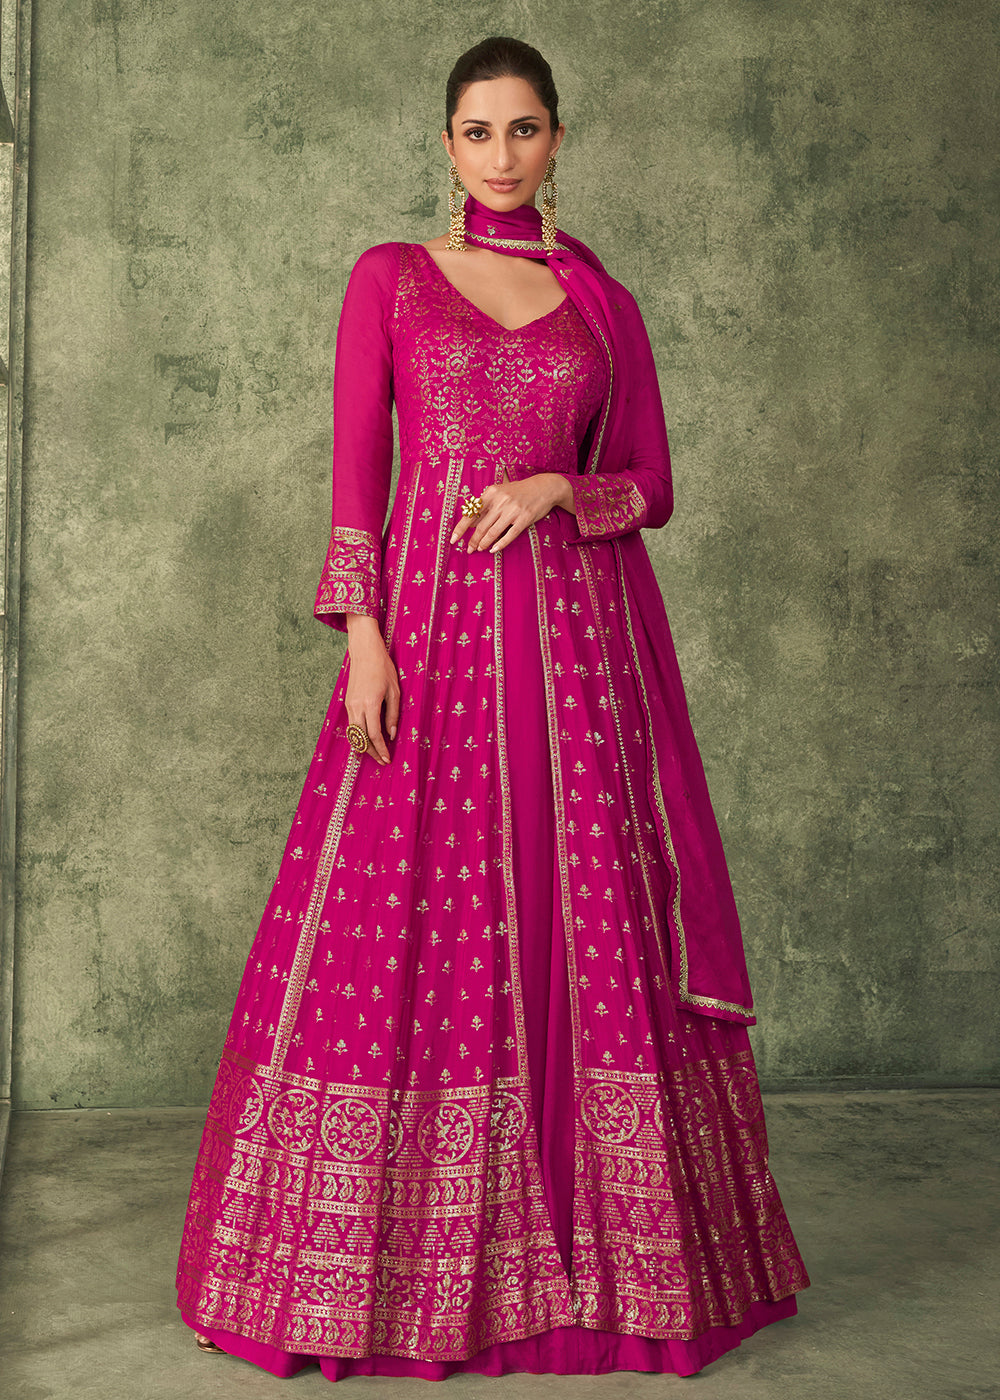 Buy Now Lehenga Style Marvelous Pink Front Slit Anarkali Suit Online in USA, UK, Australia, New Zealand, Canada, Italy & Worldwide at Empress Clothing. 